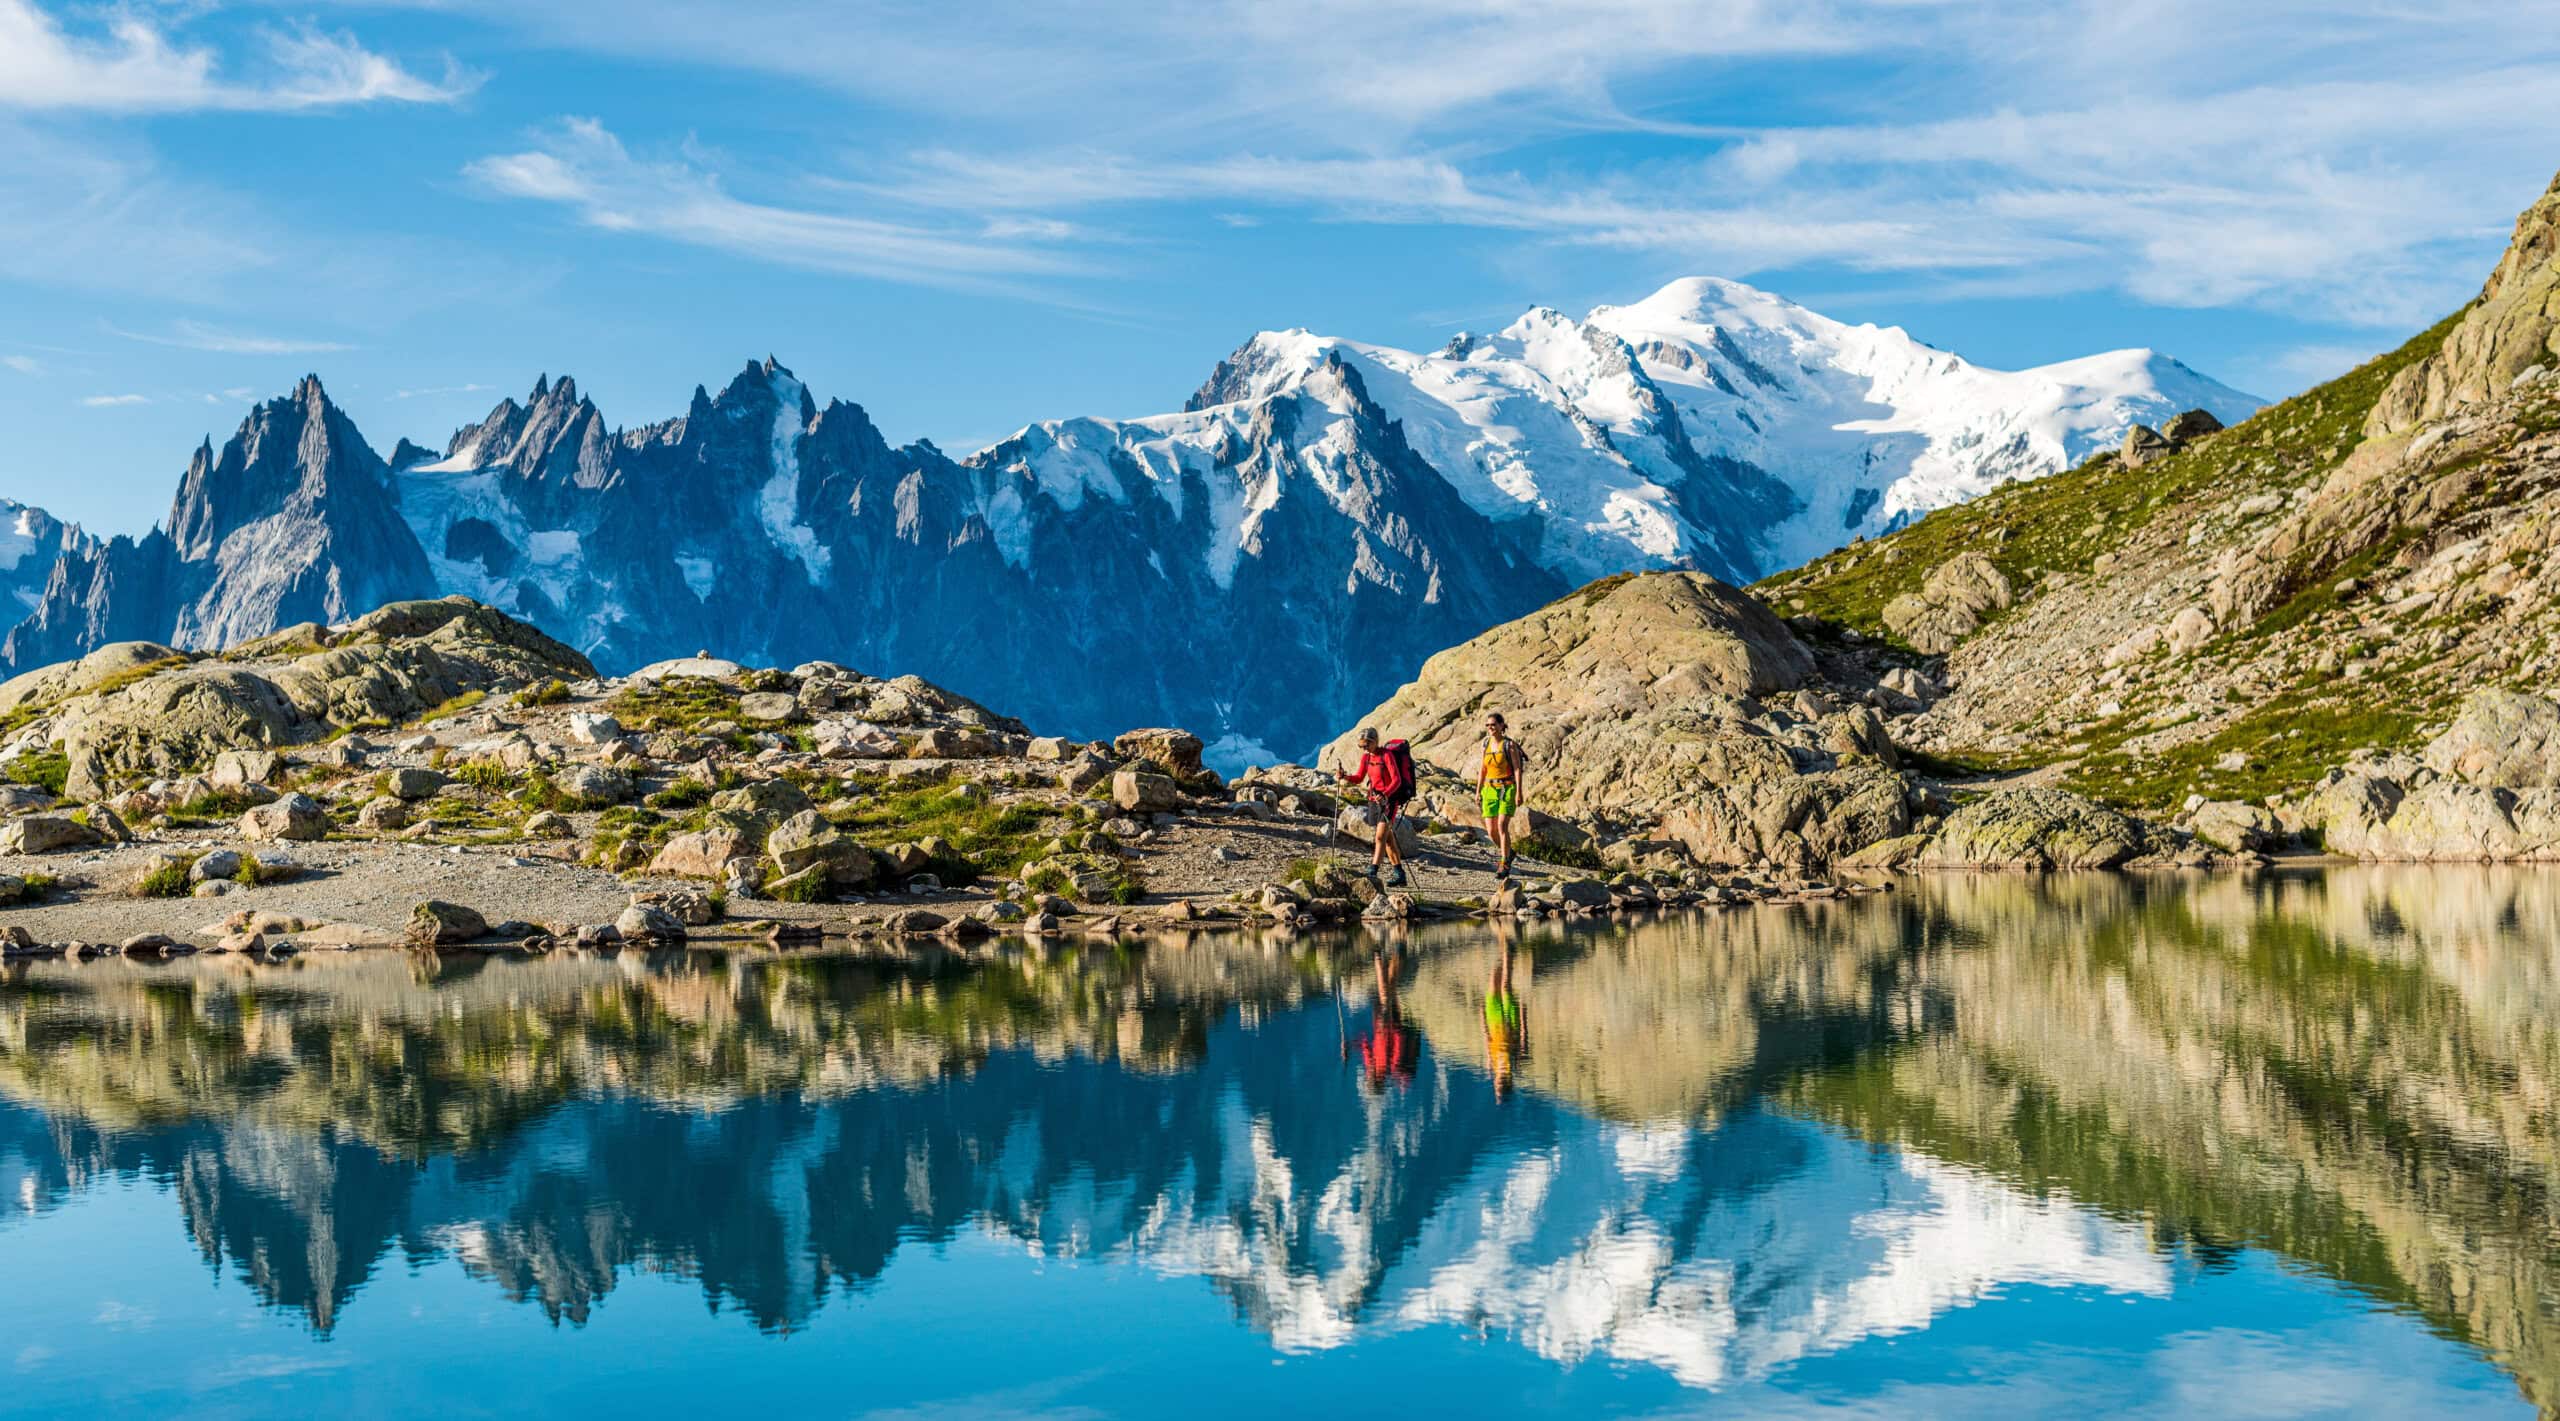 Tour du Mont Blanc Hiking Tour | Wilderness Travel